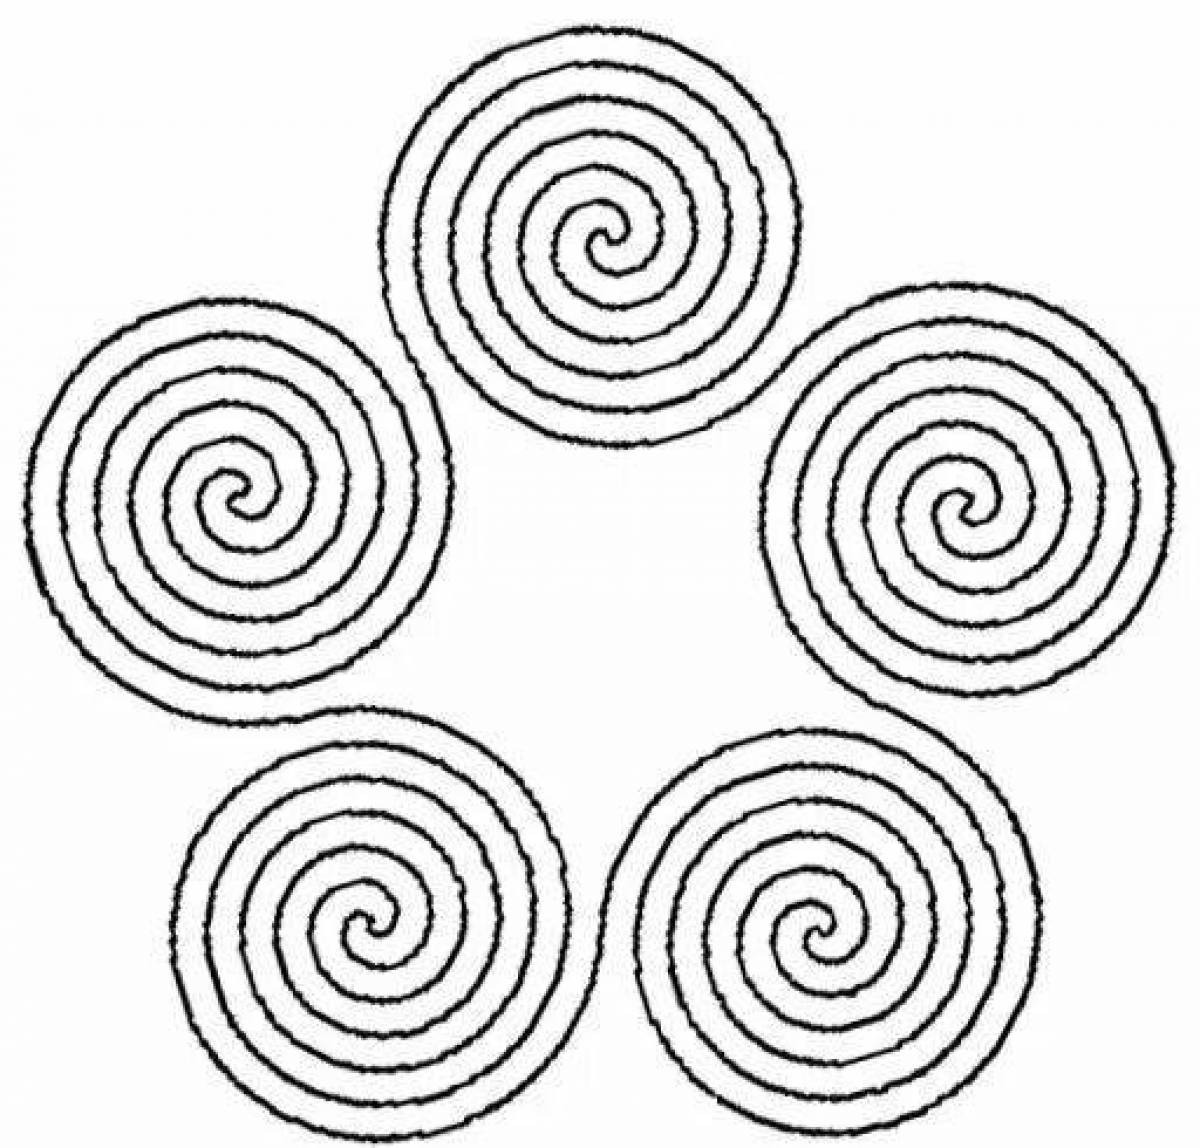 Magic coloring hidden spiral pattern